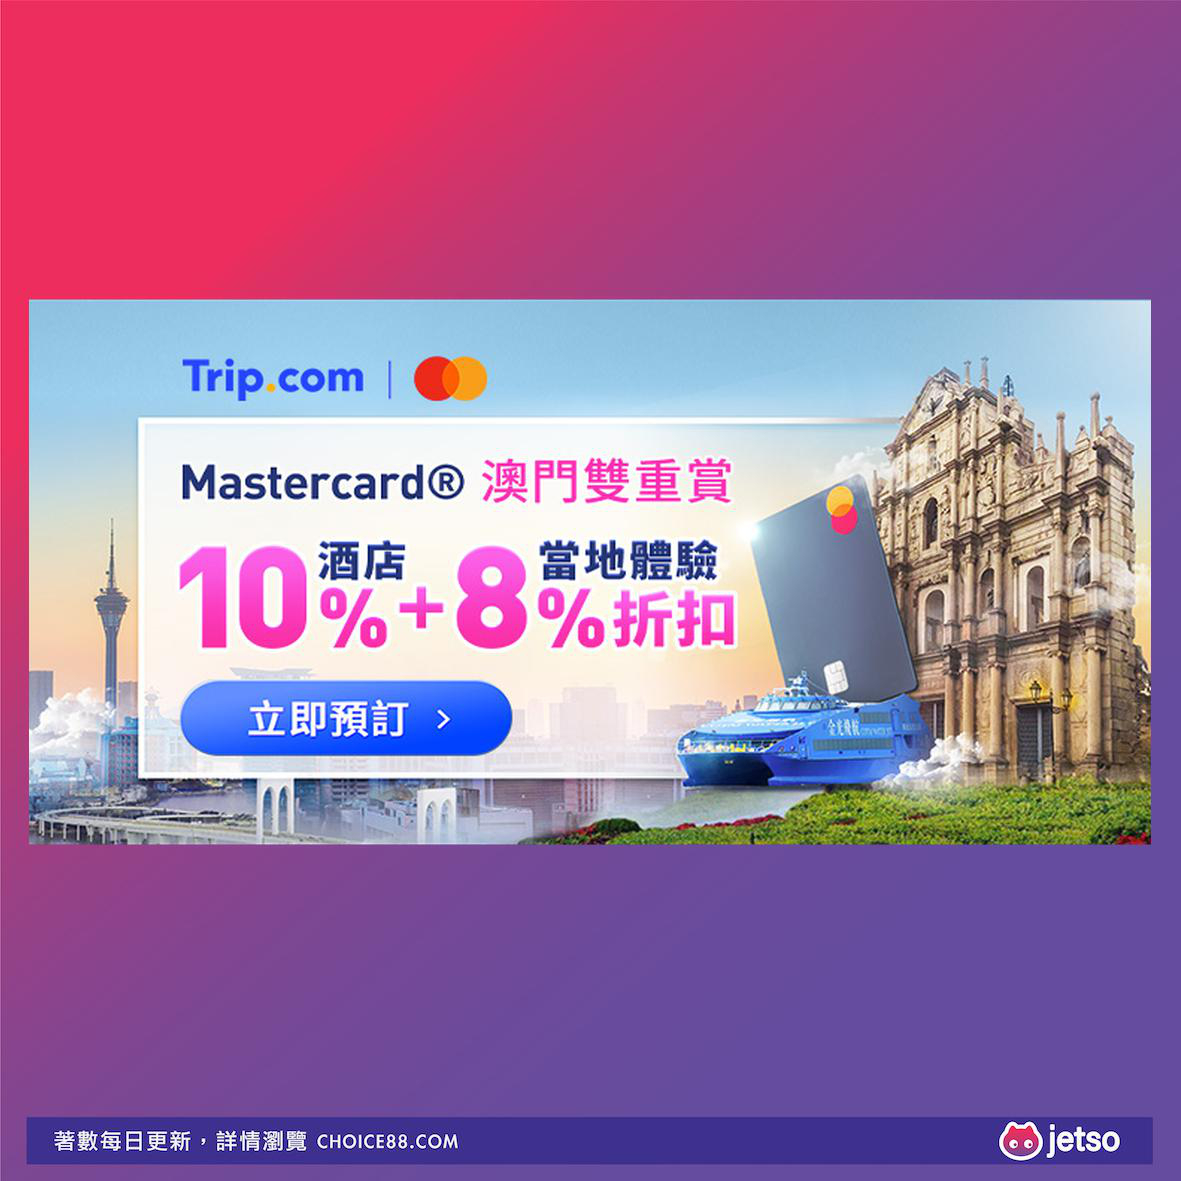 Trip.com : Mastercard® 澳門遊雙重獎賞